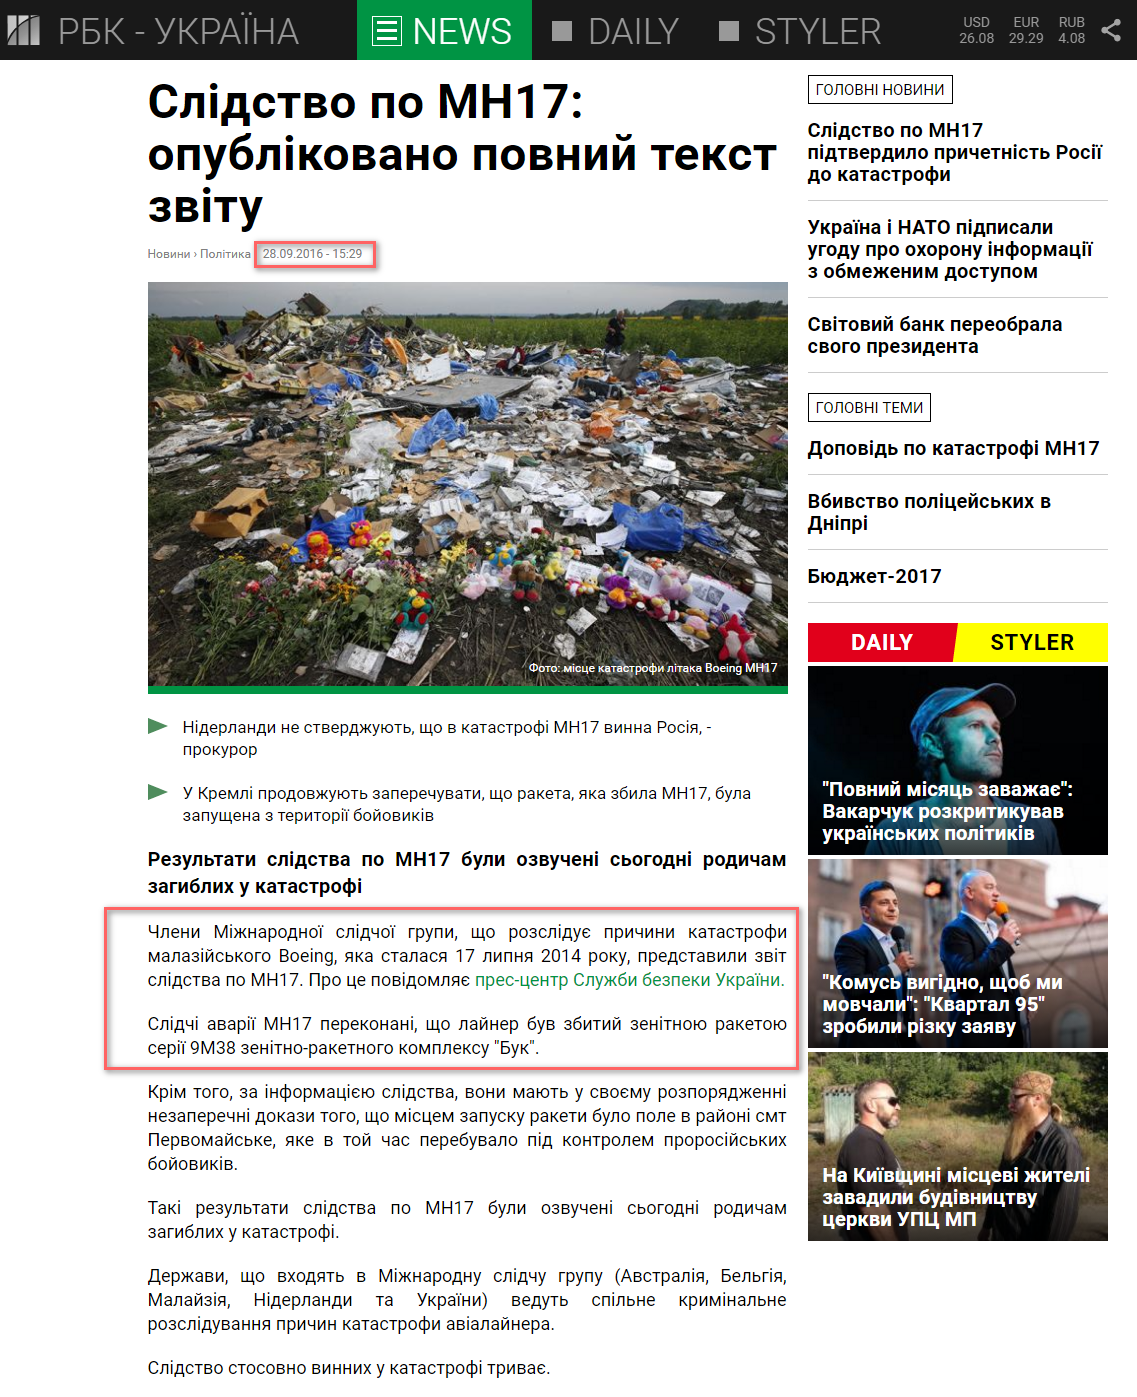 https://www.rbc.ua/ukr/news/sledstvie-mh17-opublikovan-polnyy-tekst-otcheta-1475065791.html